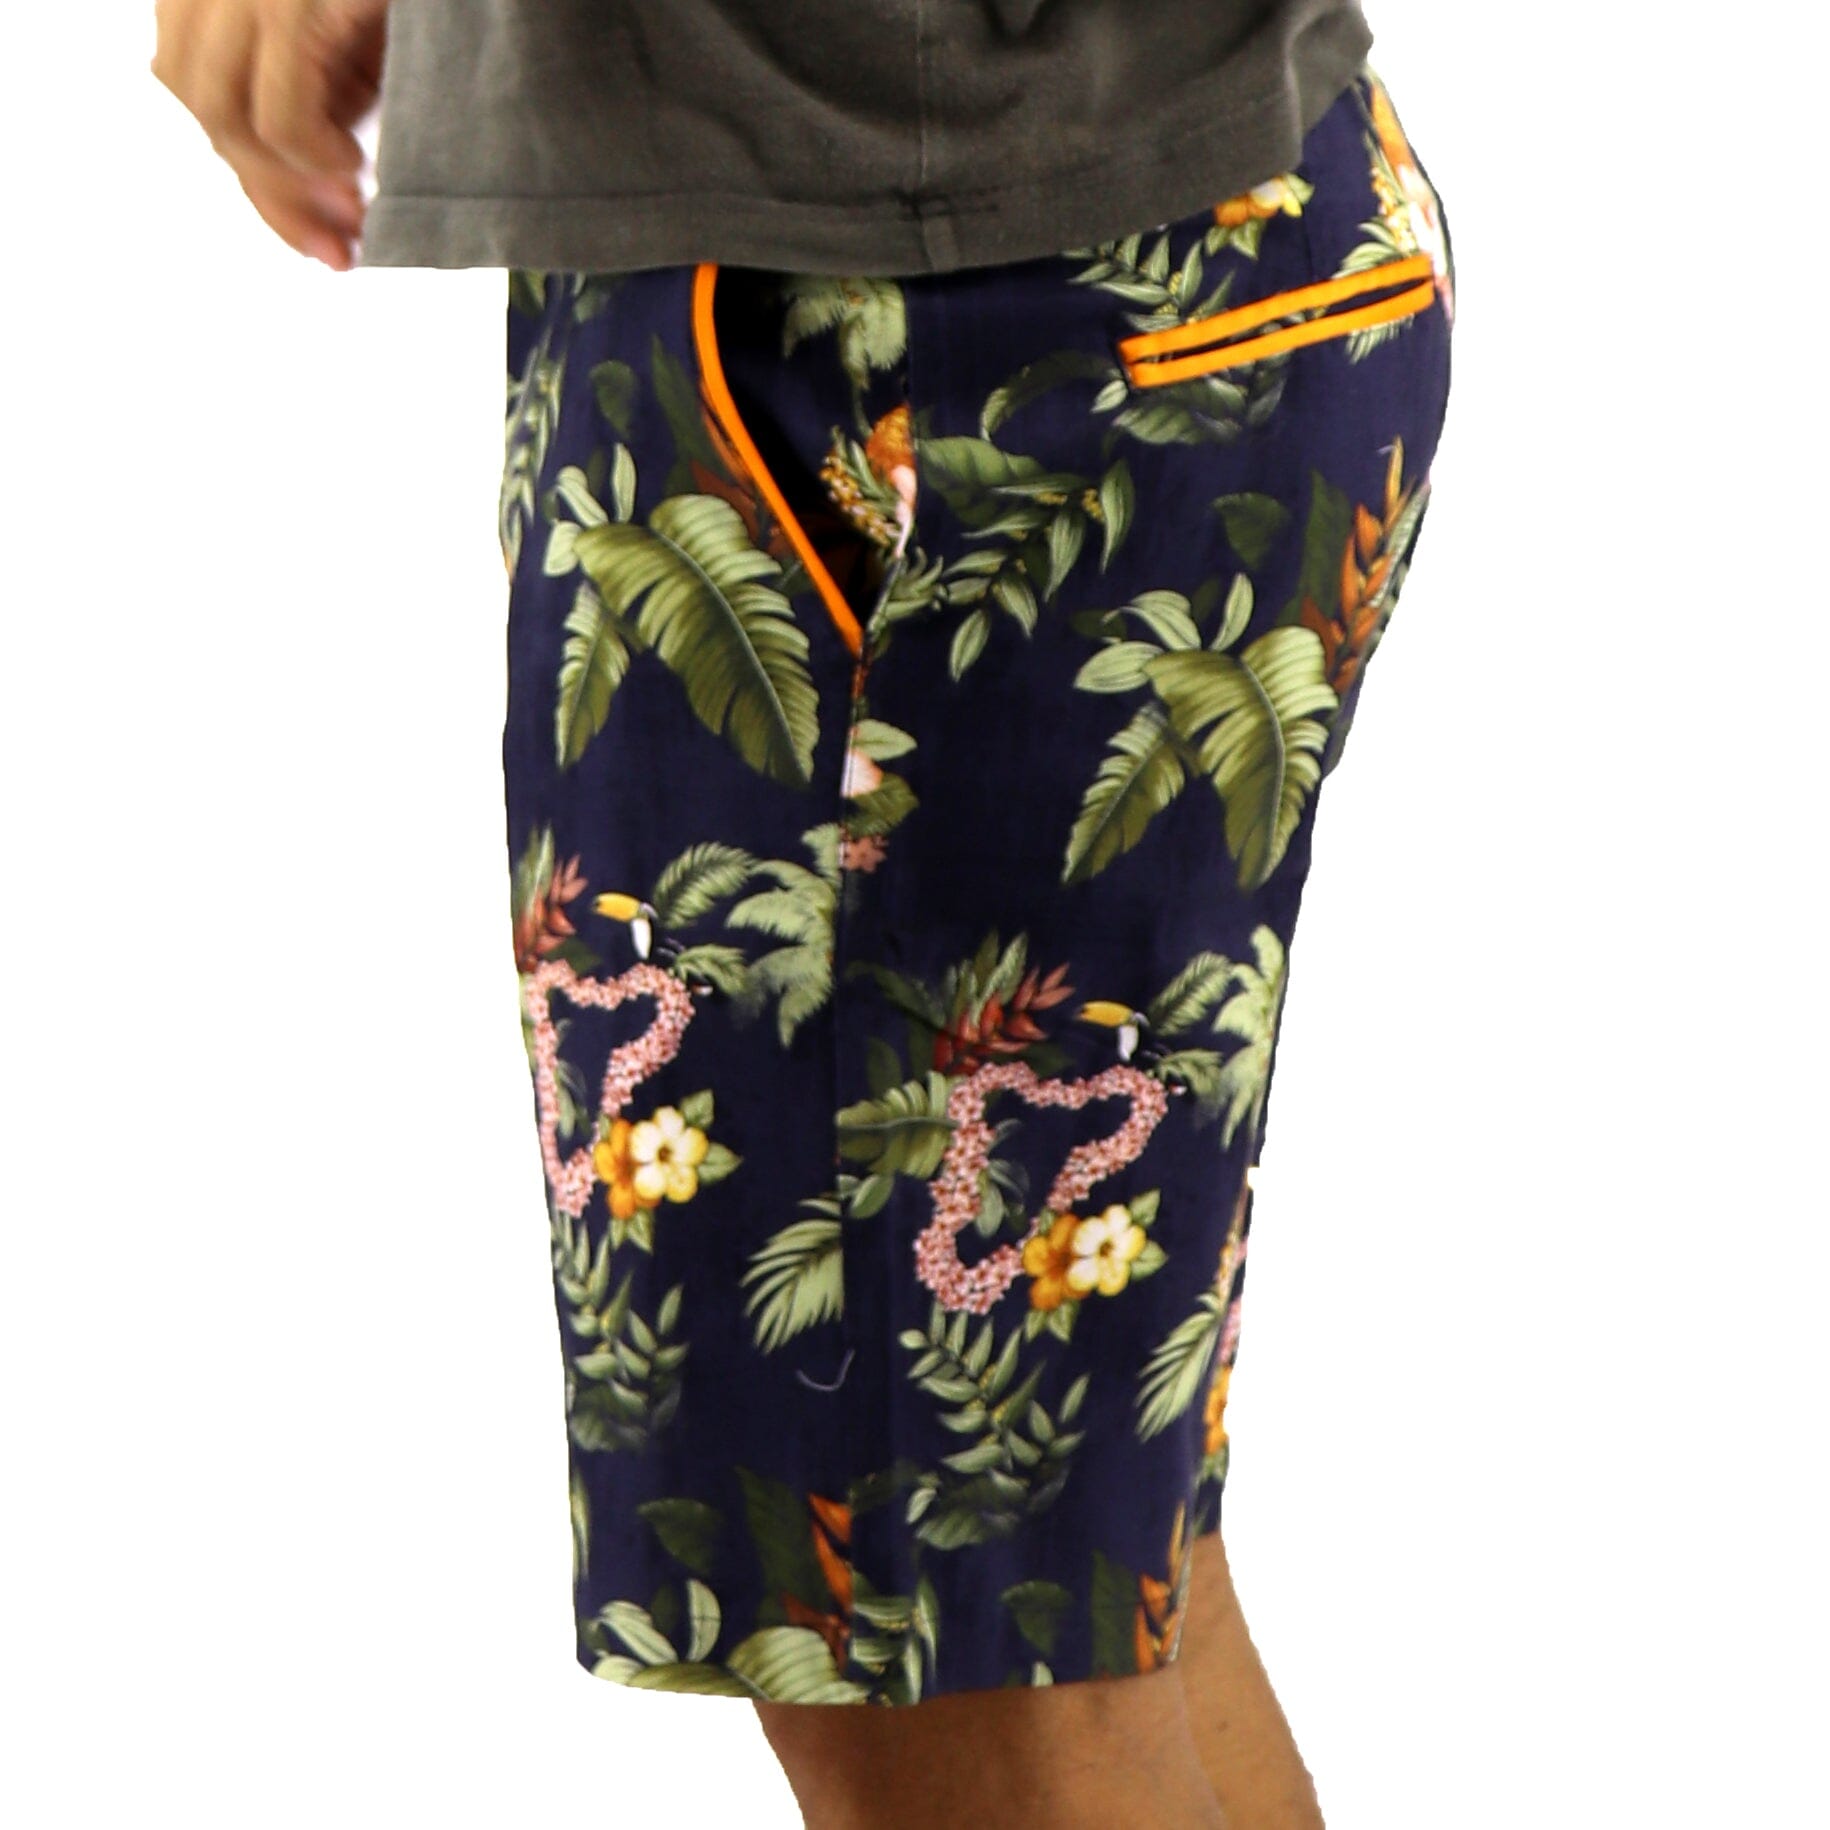 Island Shorts For Men. Men's Toucan Shorts. Mens Lei Shorts